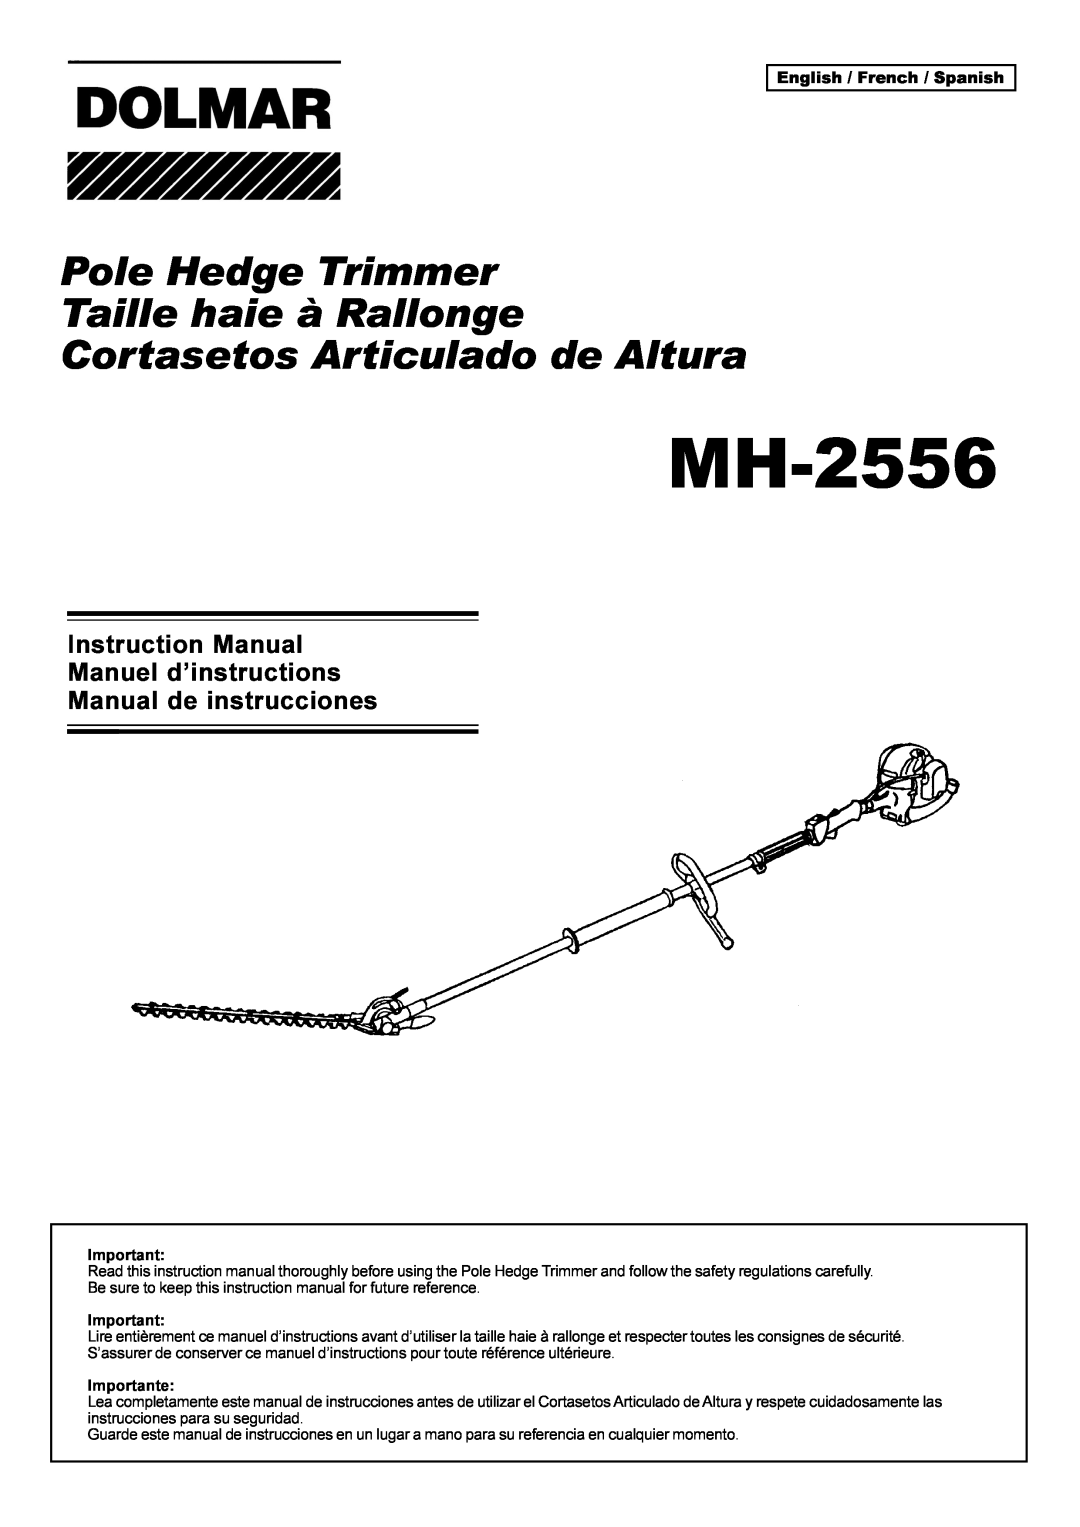 Dolmar MH-2556 instruction manual Instruction Manual Manuel d’instructions, Manual de instrucciones 